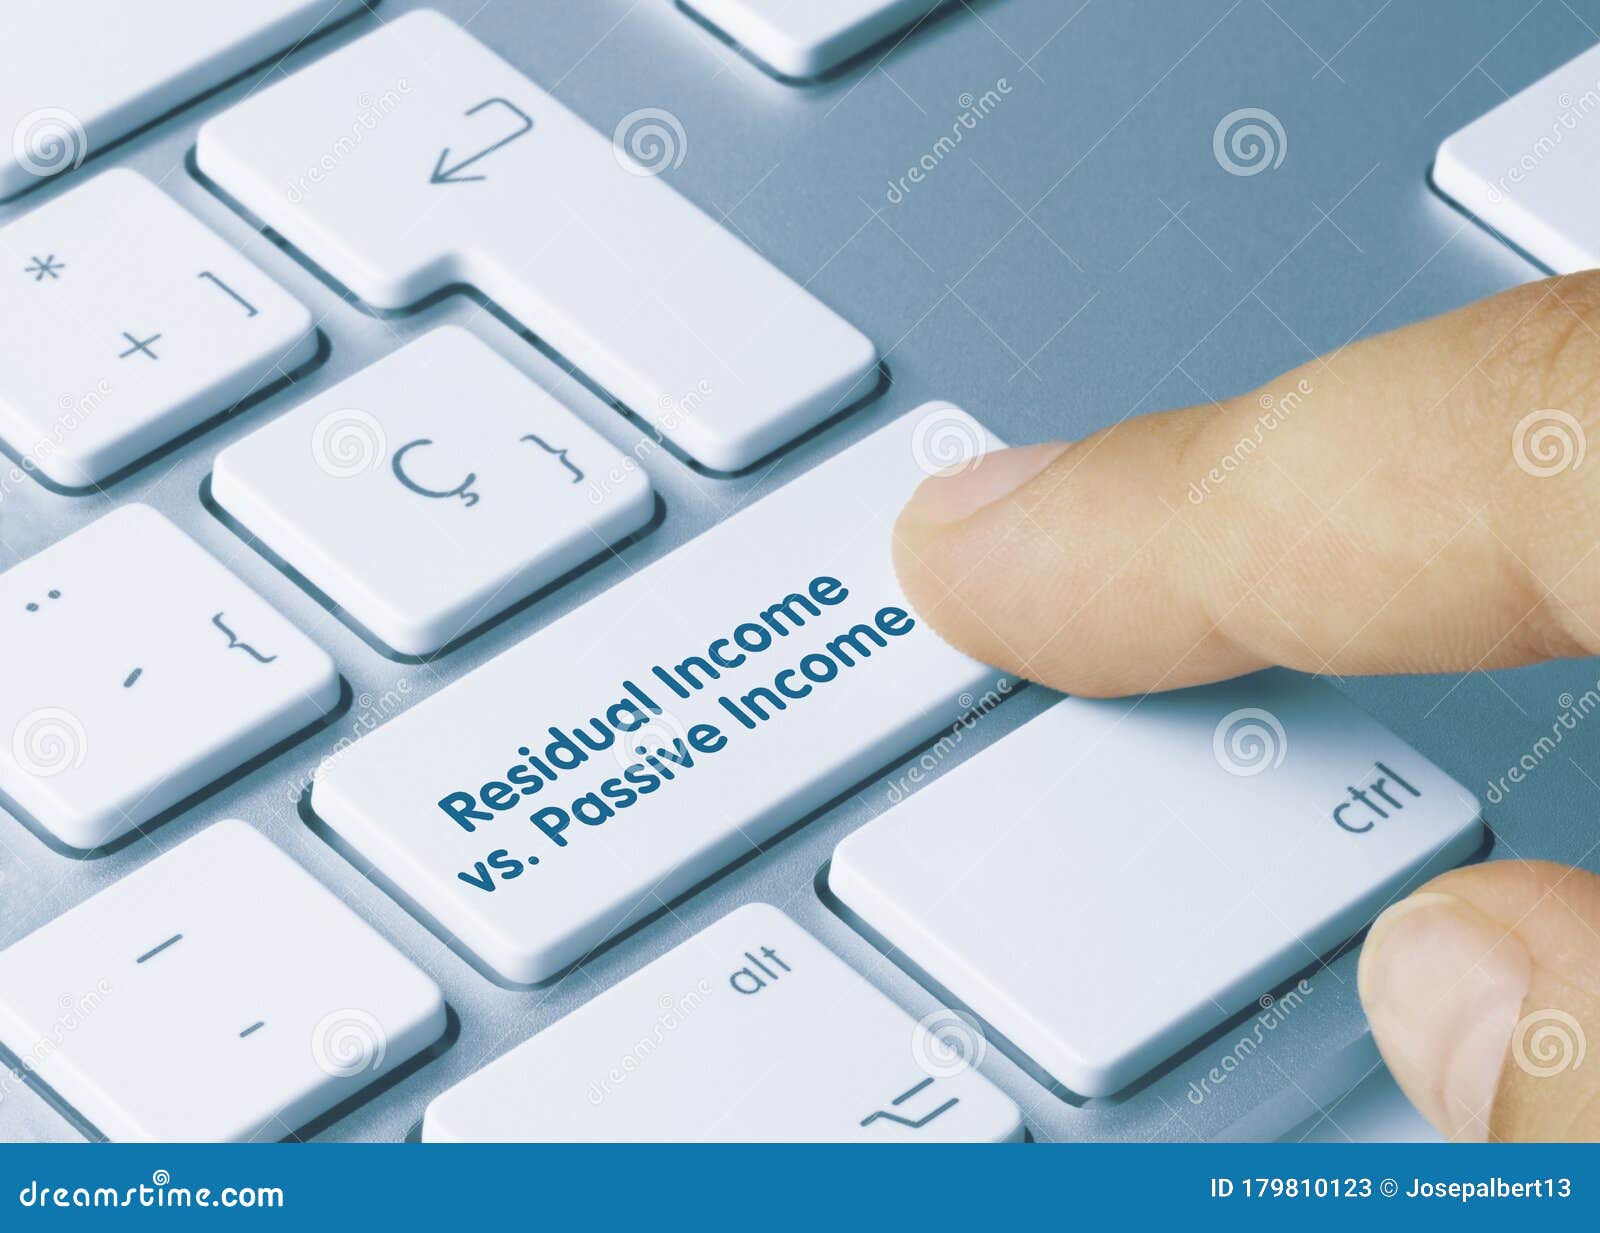 residual income vs. passive income - inscription on blue keyboard key